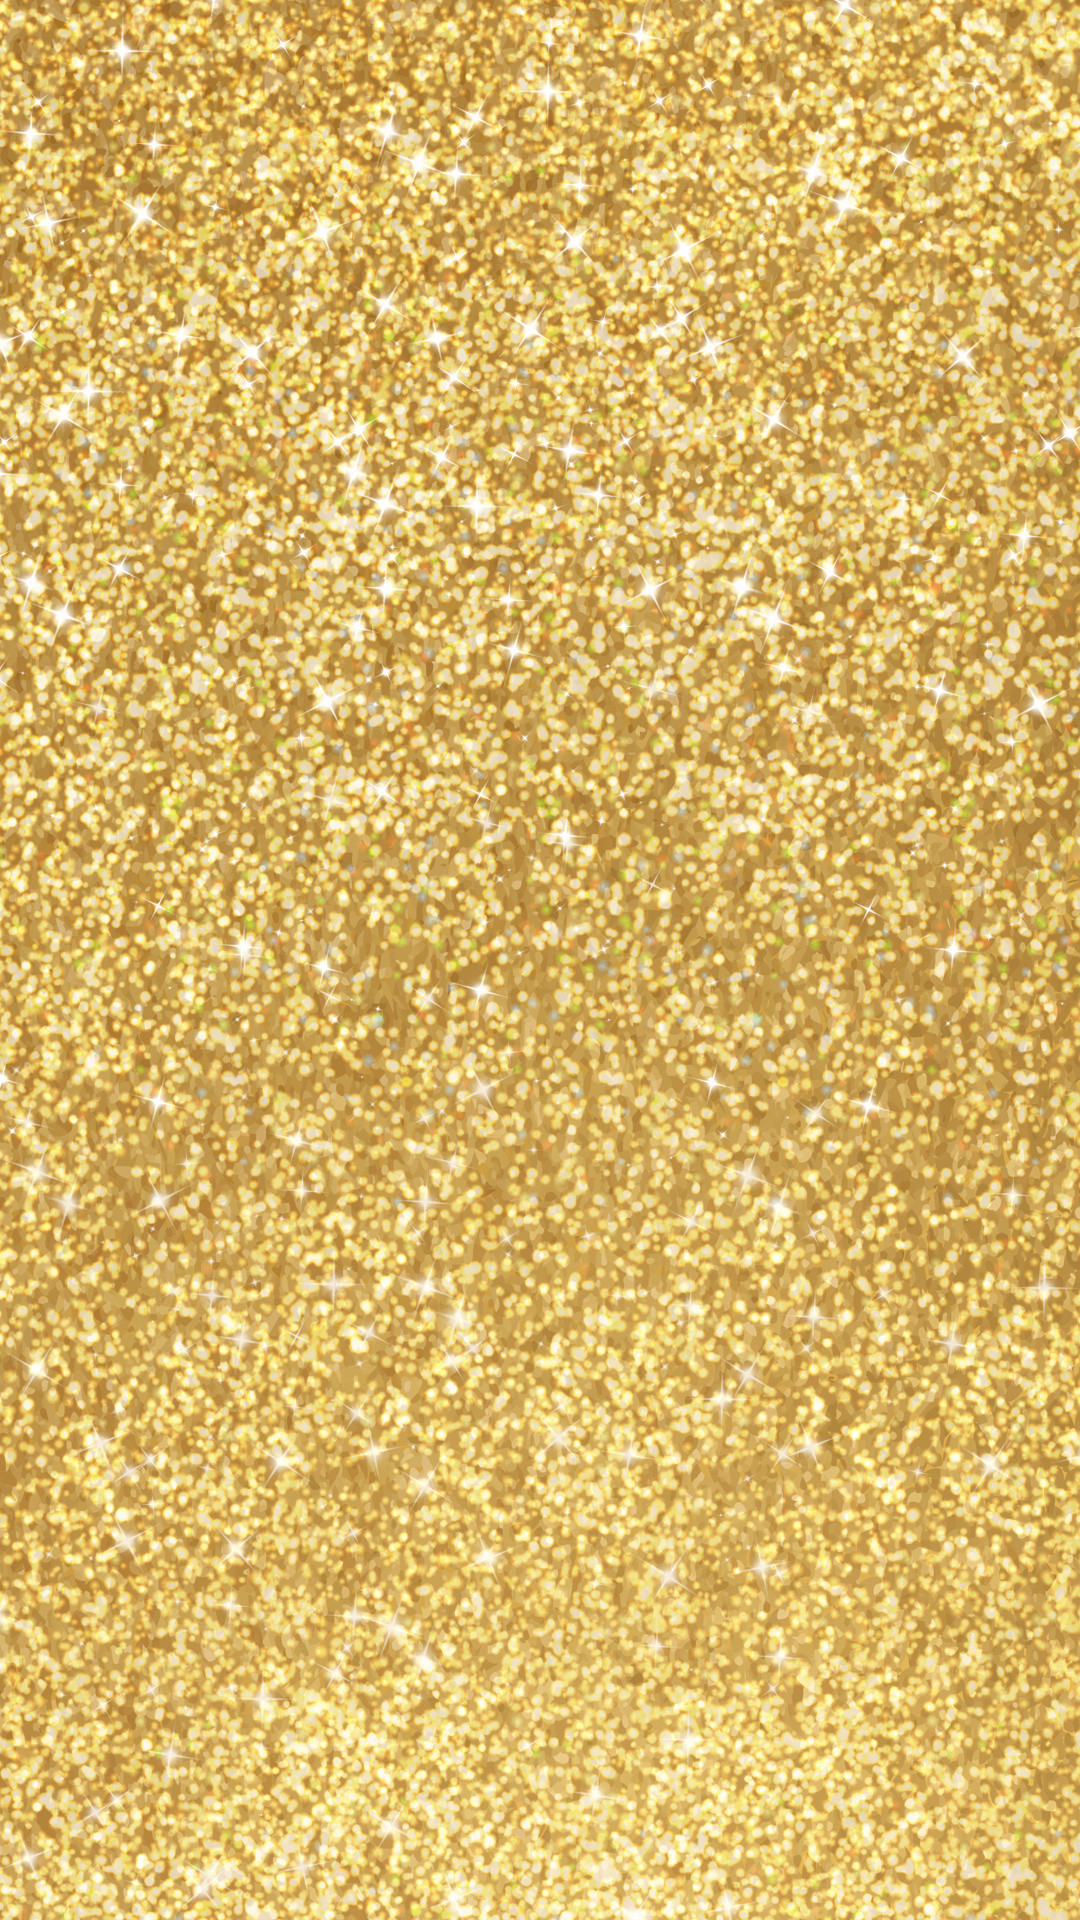 1080x Glitter Wallpaper Fresh Gold Glitter Wallpaper Glitter iPhone X